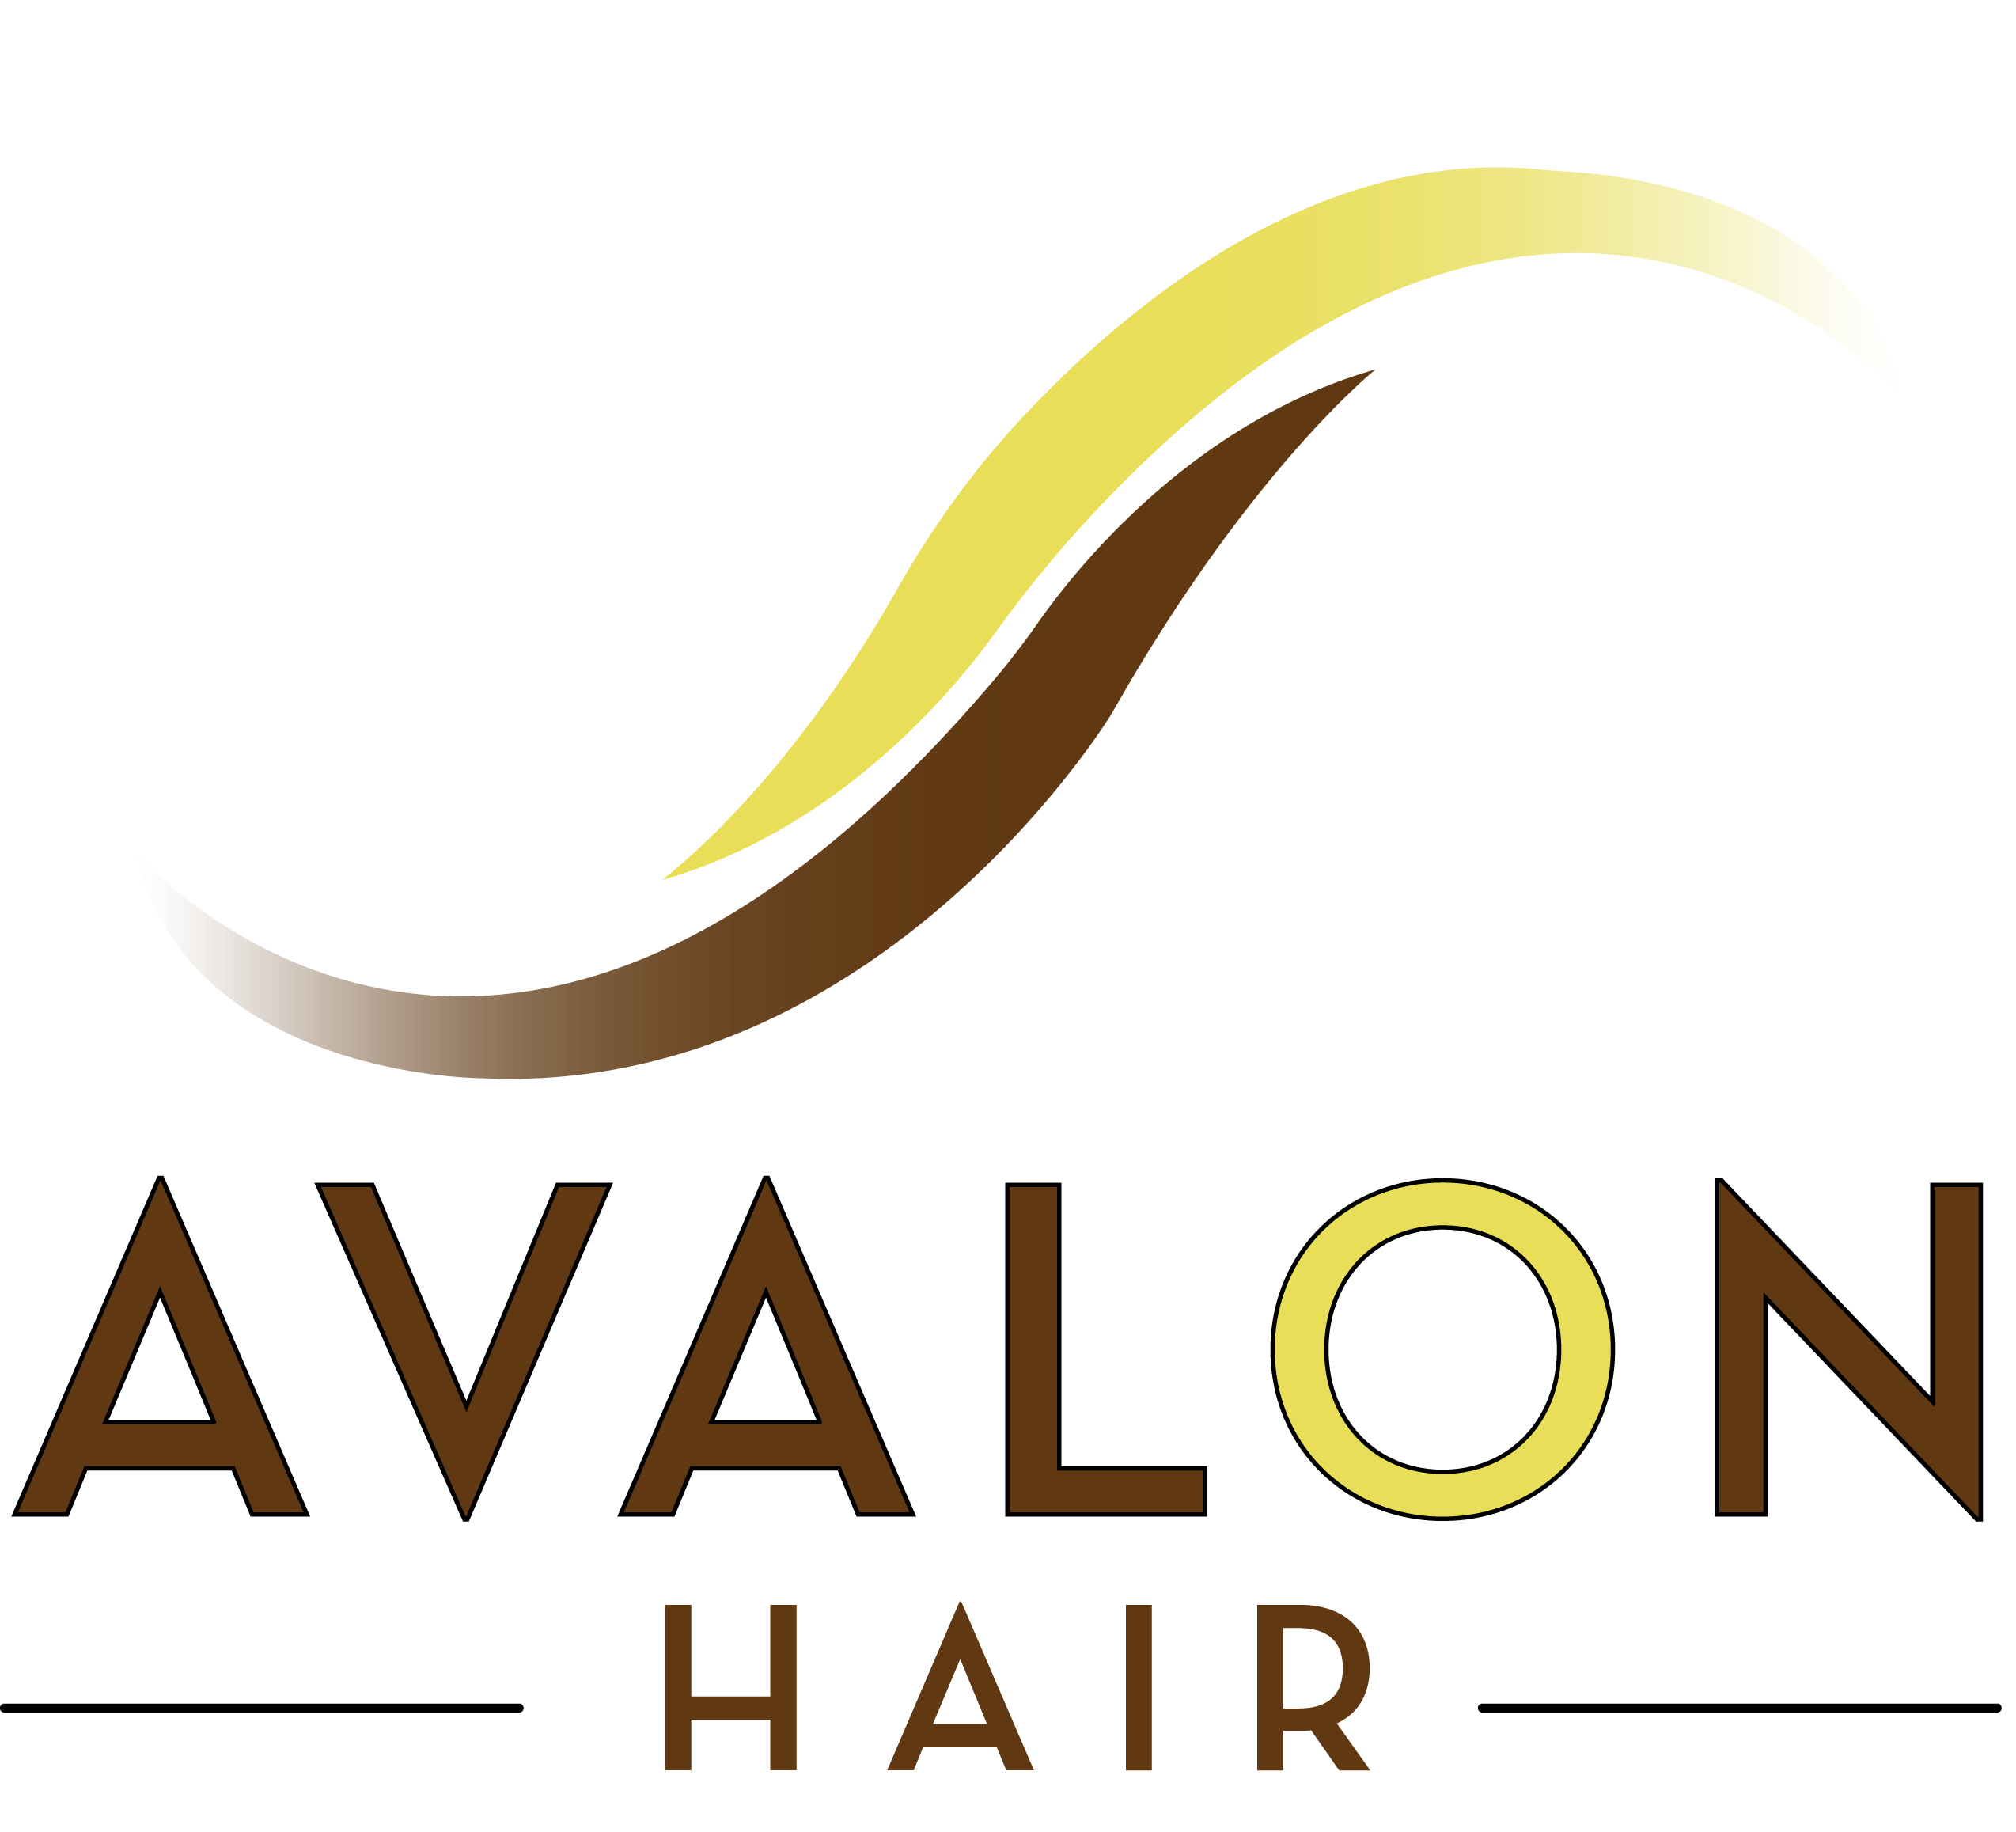 Avalon Hair